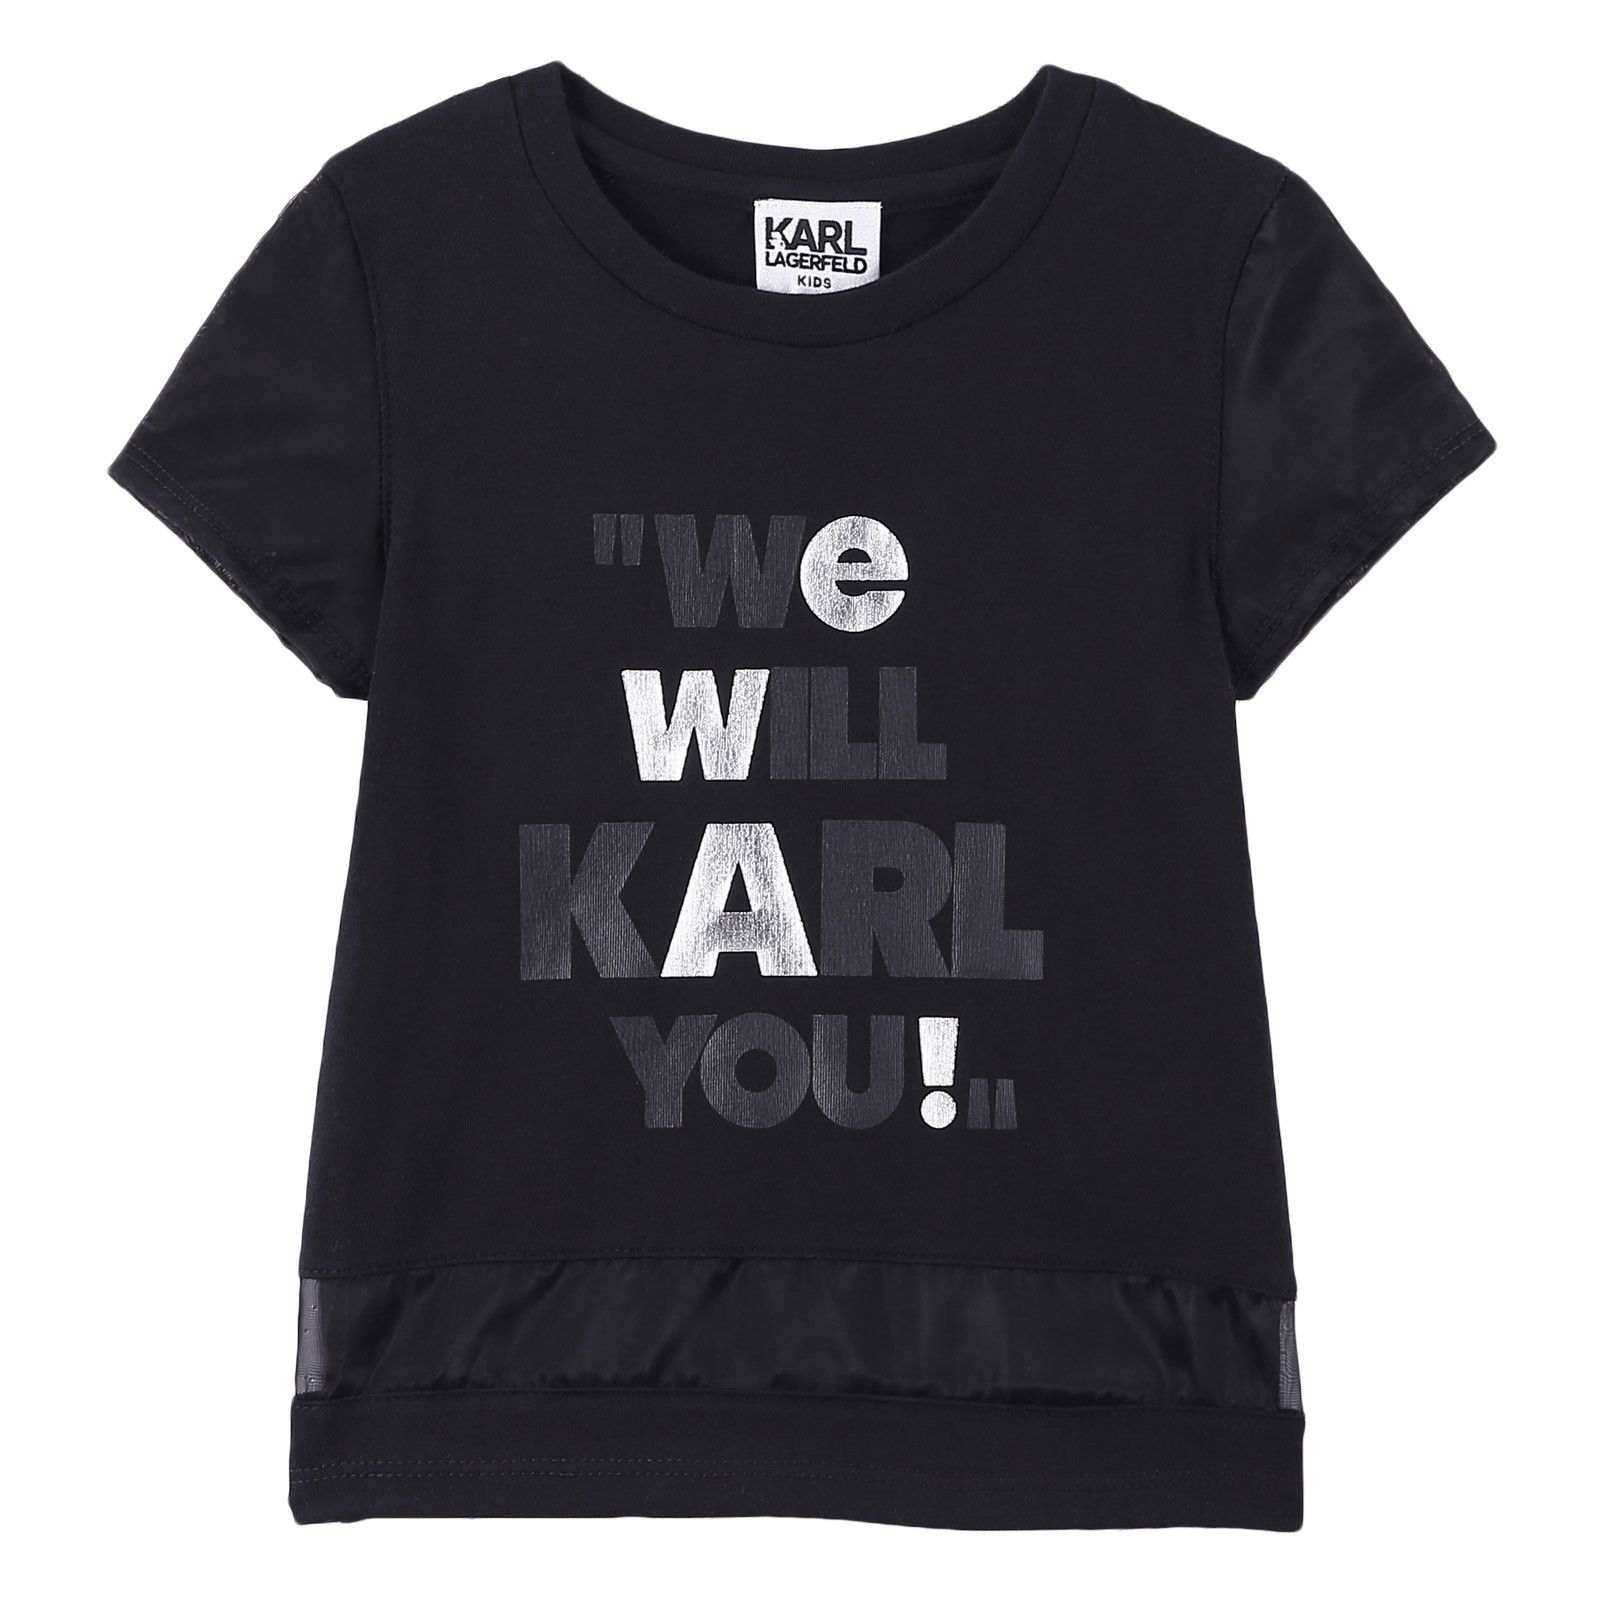 Girls Black Cotton T-Shirt With 'We Will Karl You' Print - CÉMAROSE | Children's Fashion Store - 1